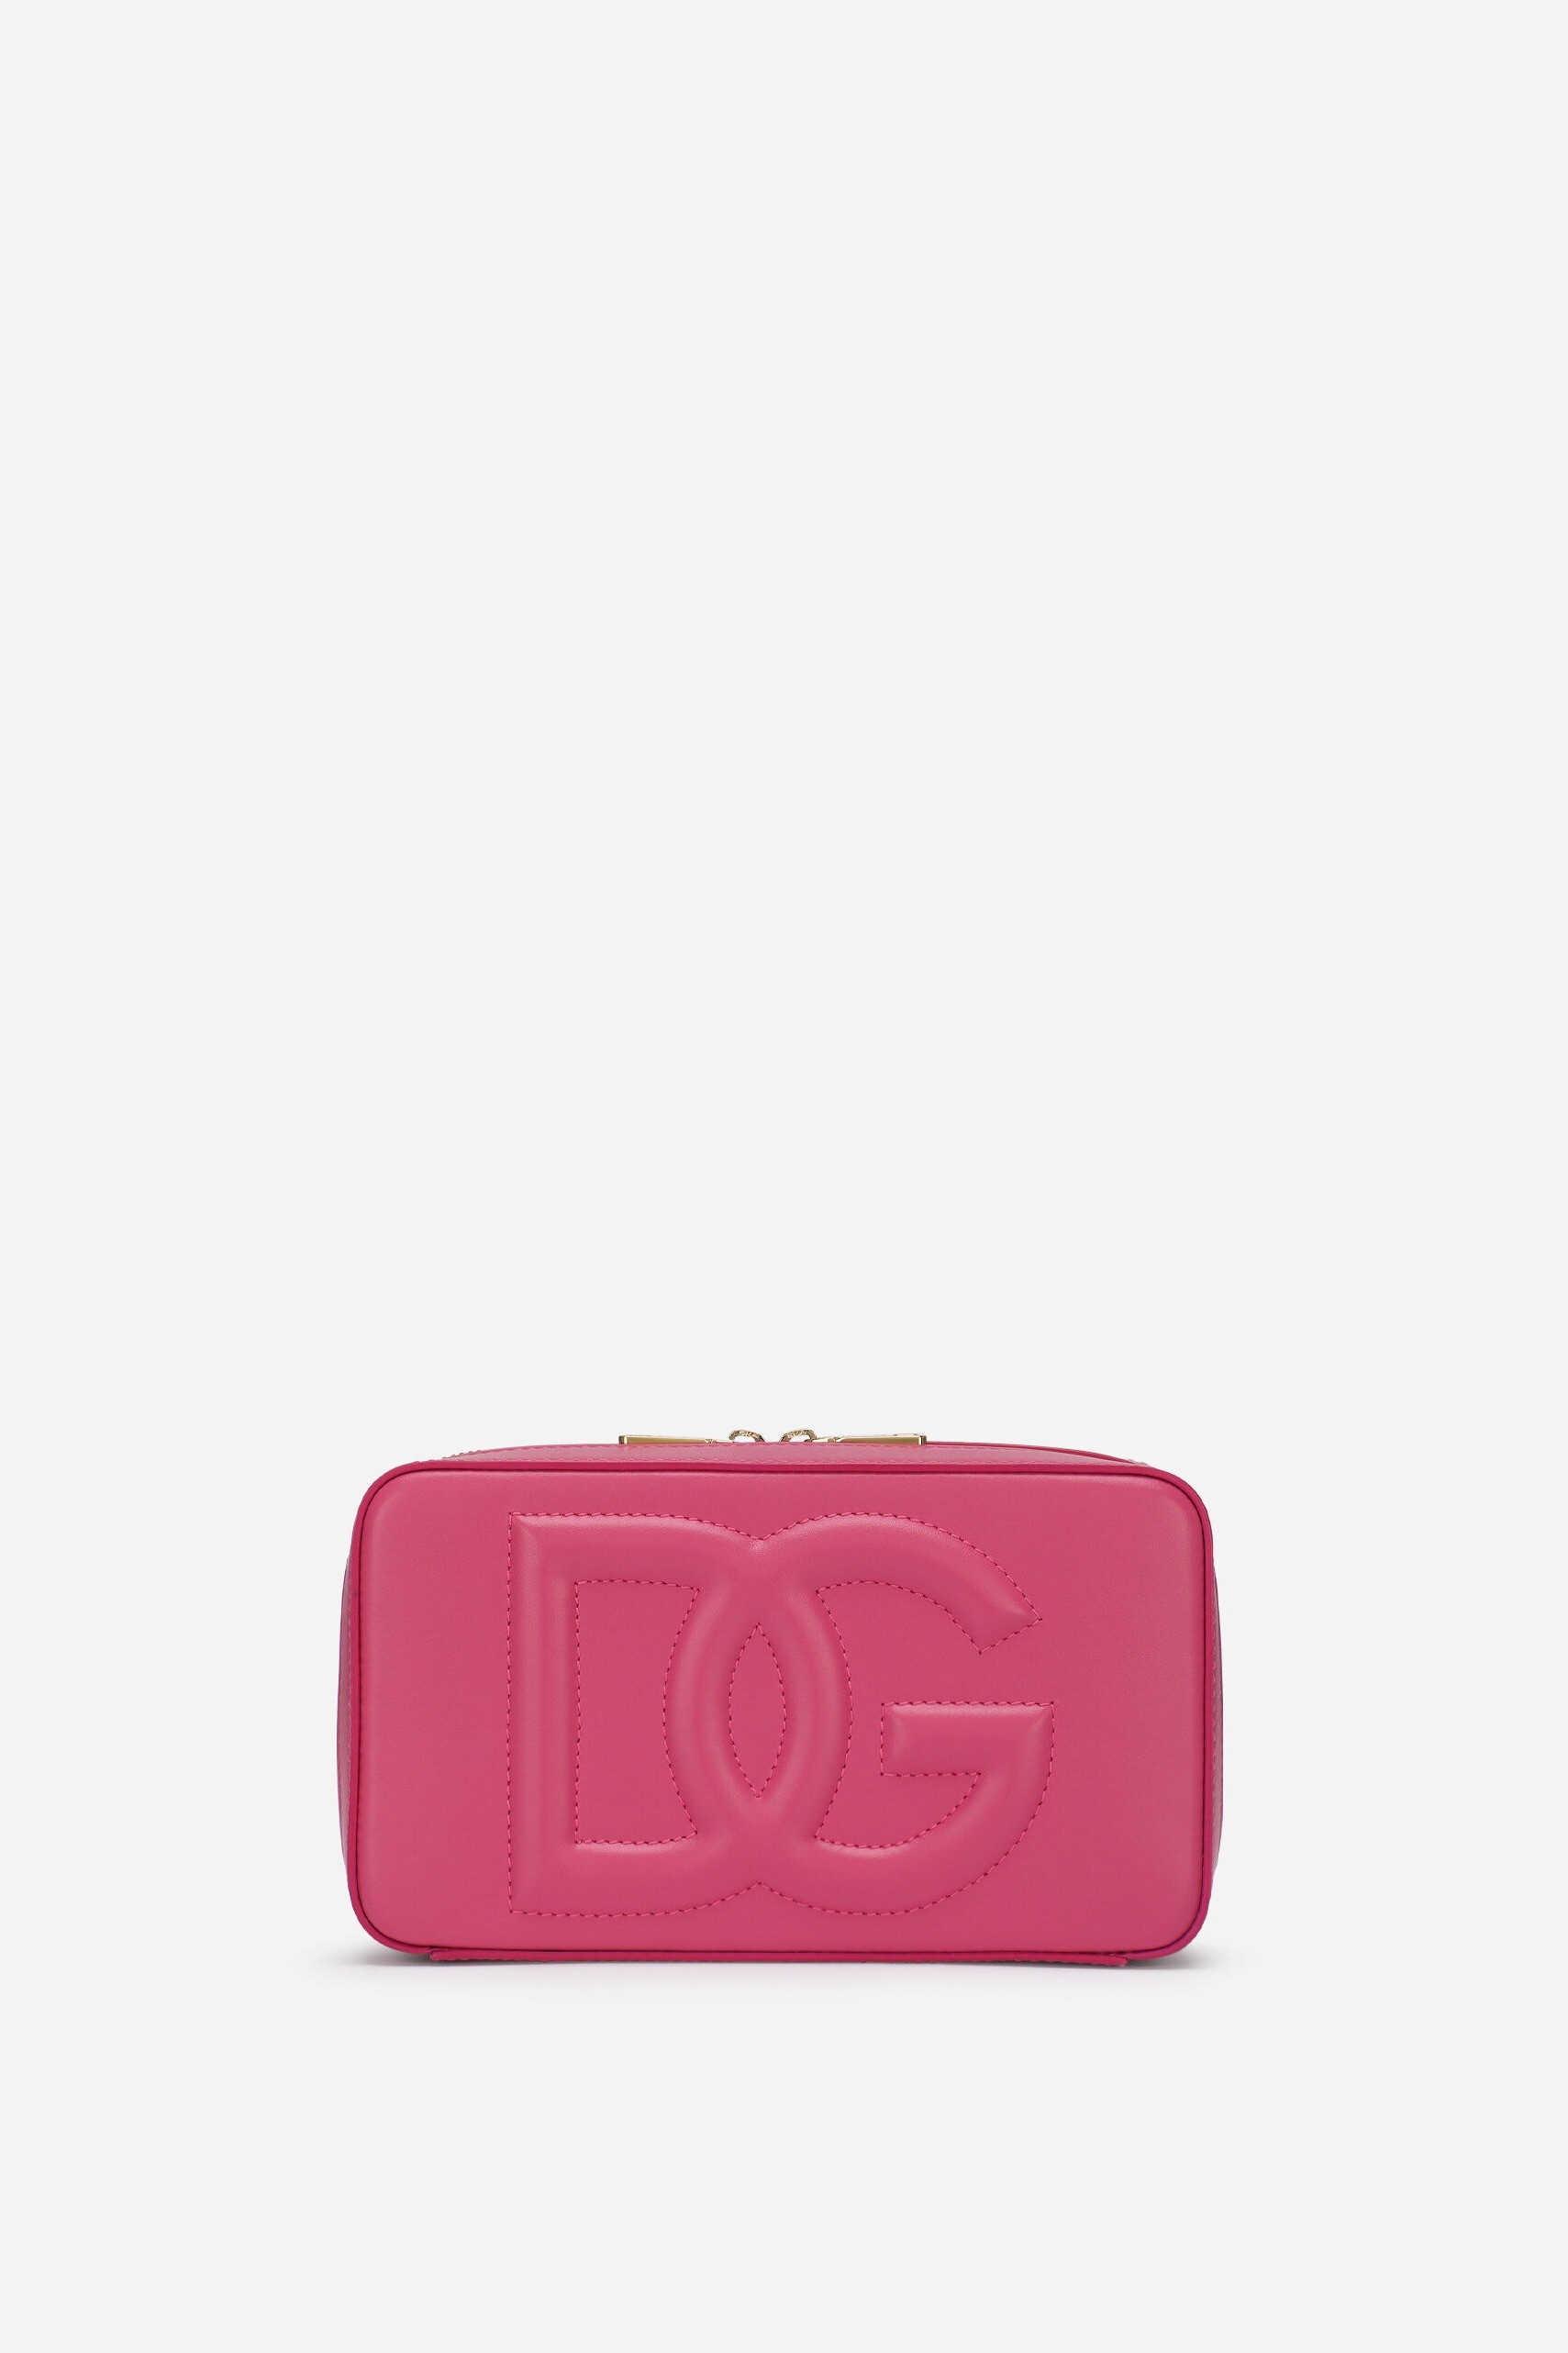 Dolce & Gabbana - SMALL CALFSKIN DG LOGO CAMERA BAG - Pink